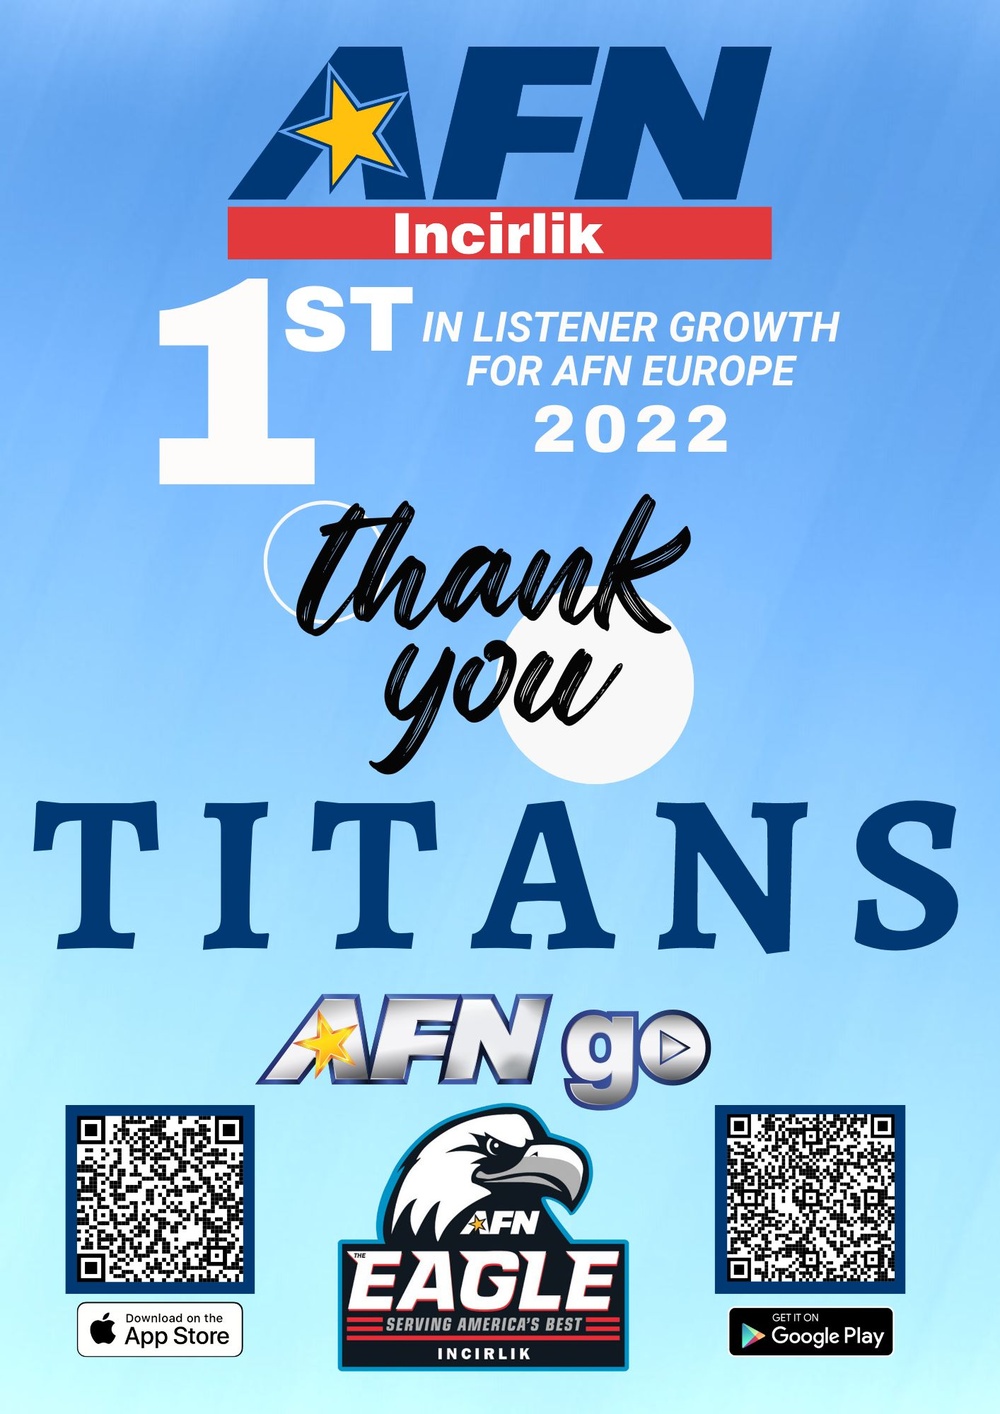 AFN Incirlik 1st Place in Listener Growth 2022 in AFN Europe